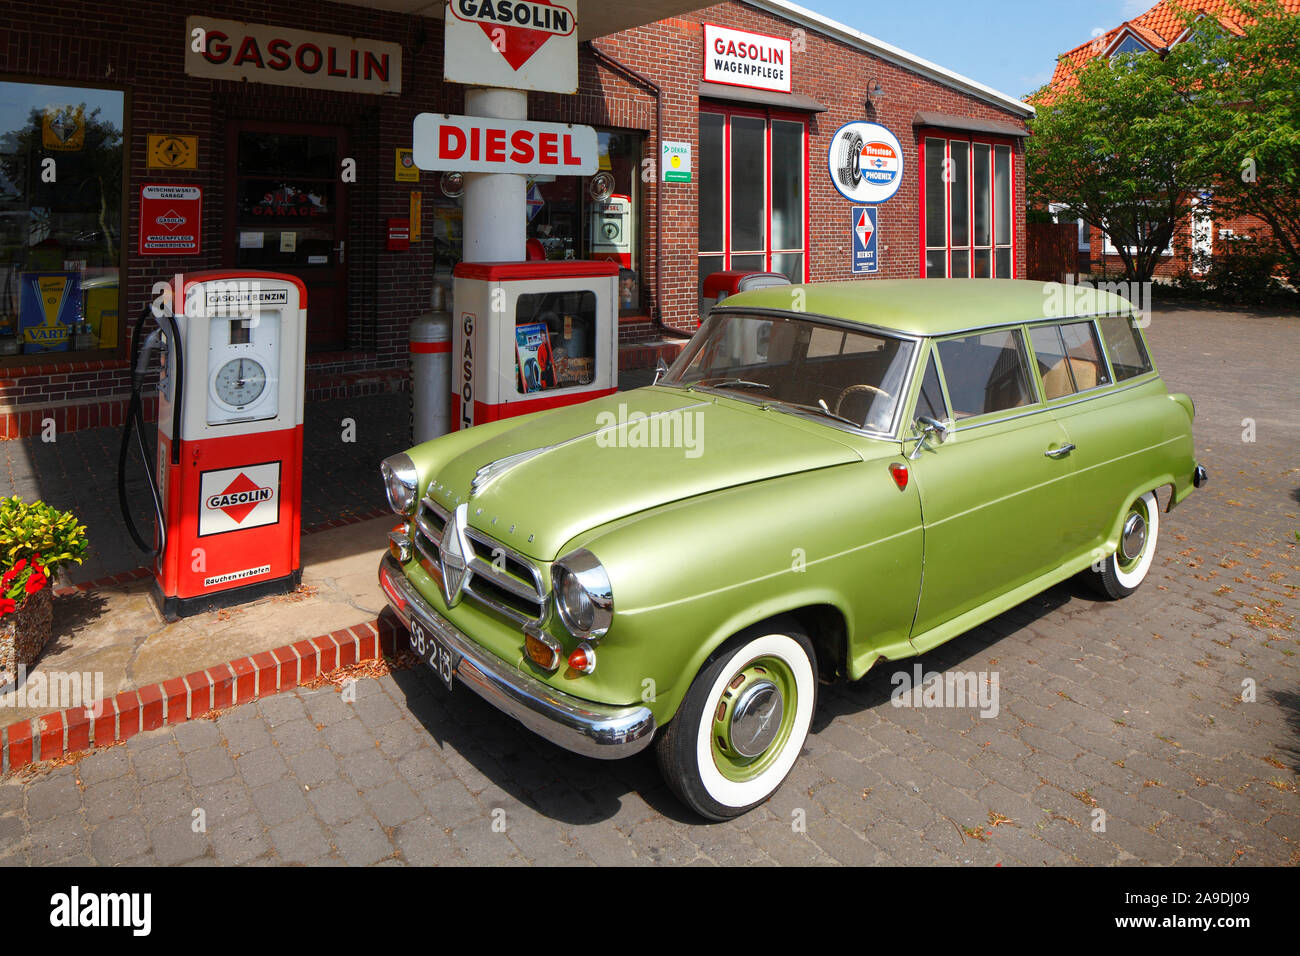 Borgward vintage car, old petrol pump at a gas station, Bruchhausen-Vilsen, Lower Saxony, Germany, Europe Stock Photo